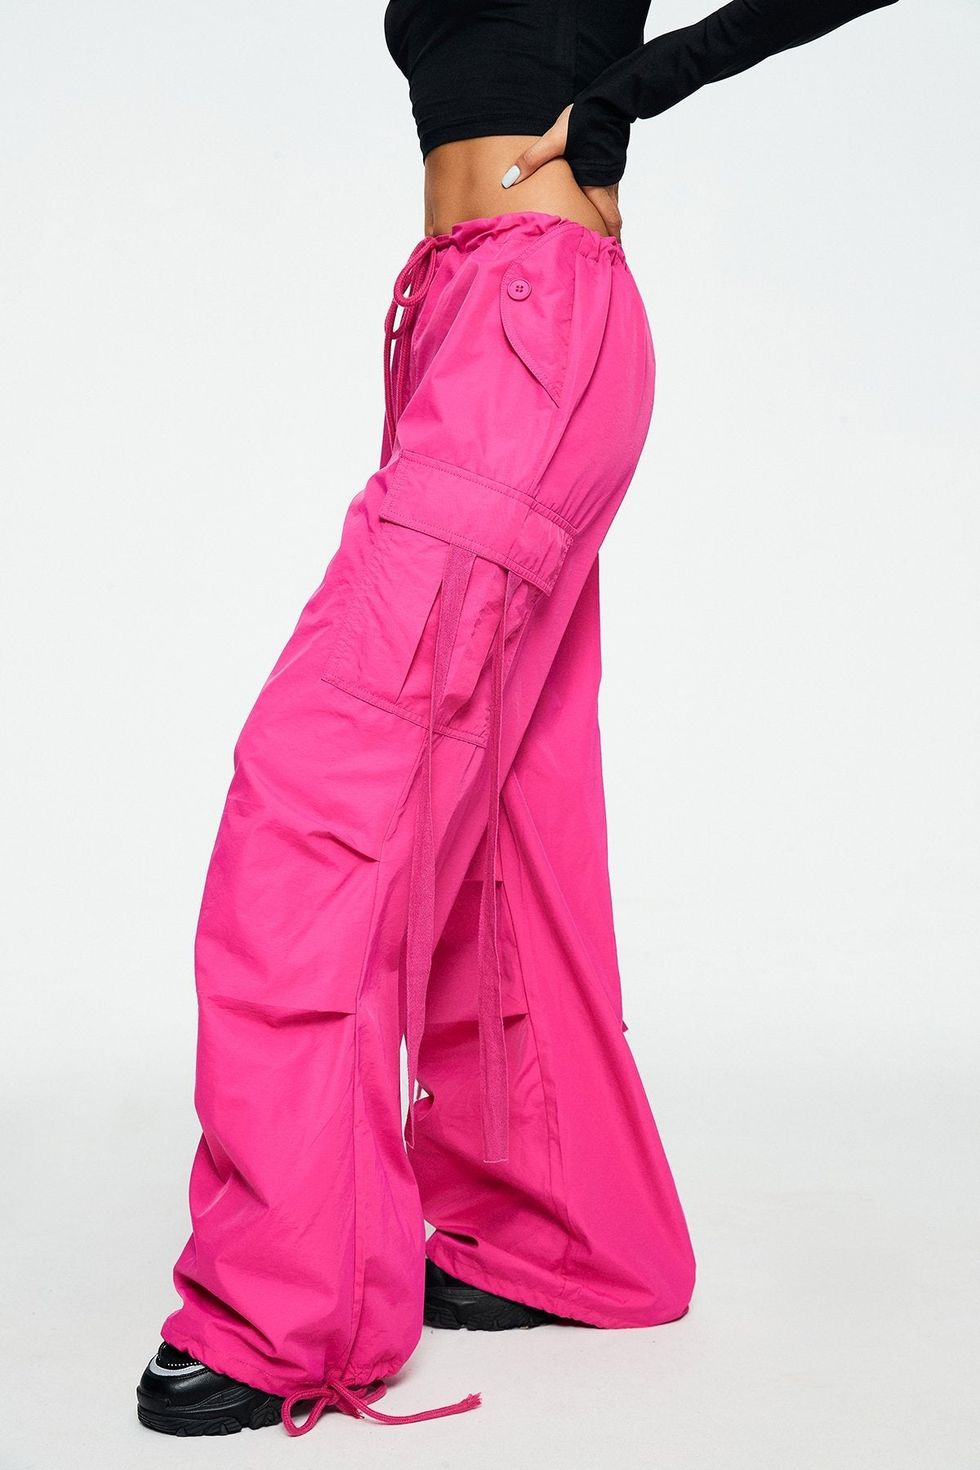 Women Fashion Pink Cargo Pants Personalised Large Pockets